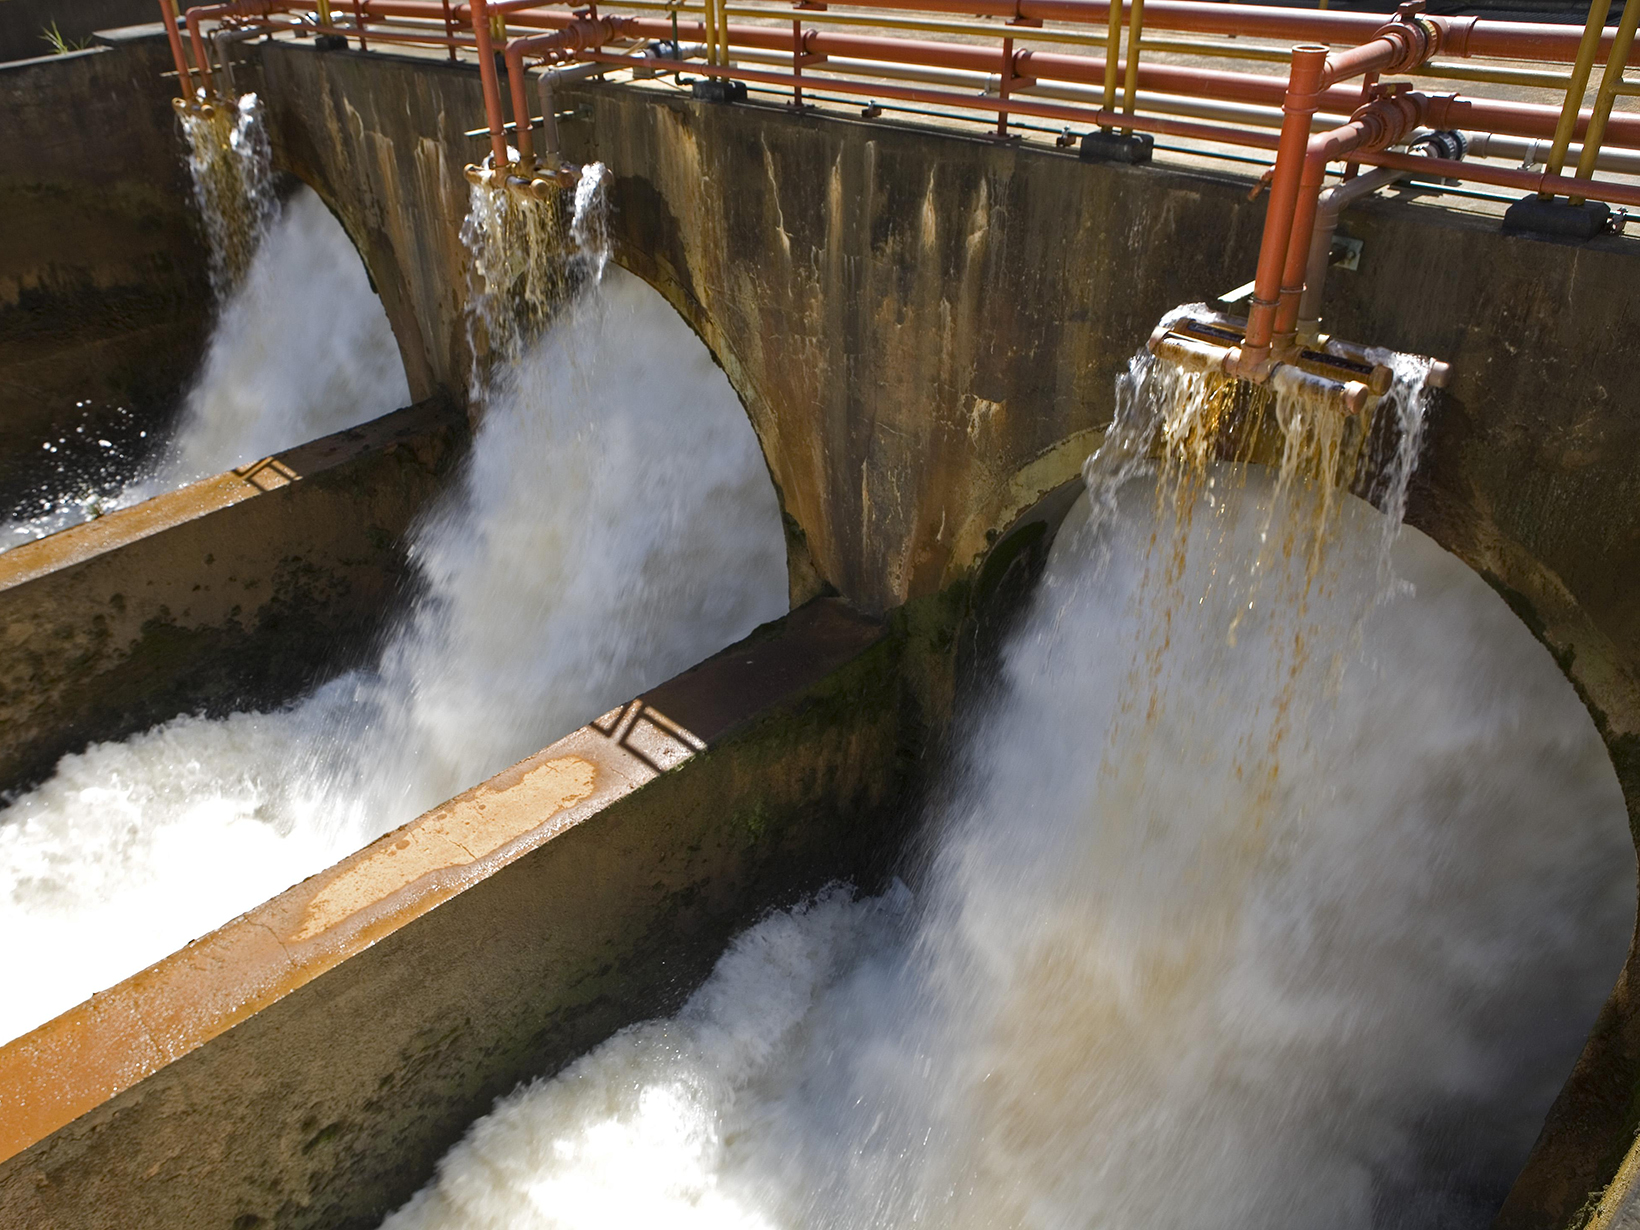 Water rushing through the gates of a dam.